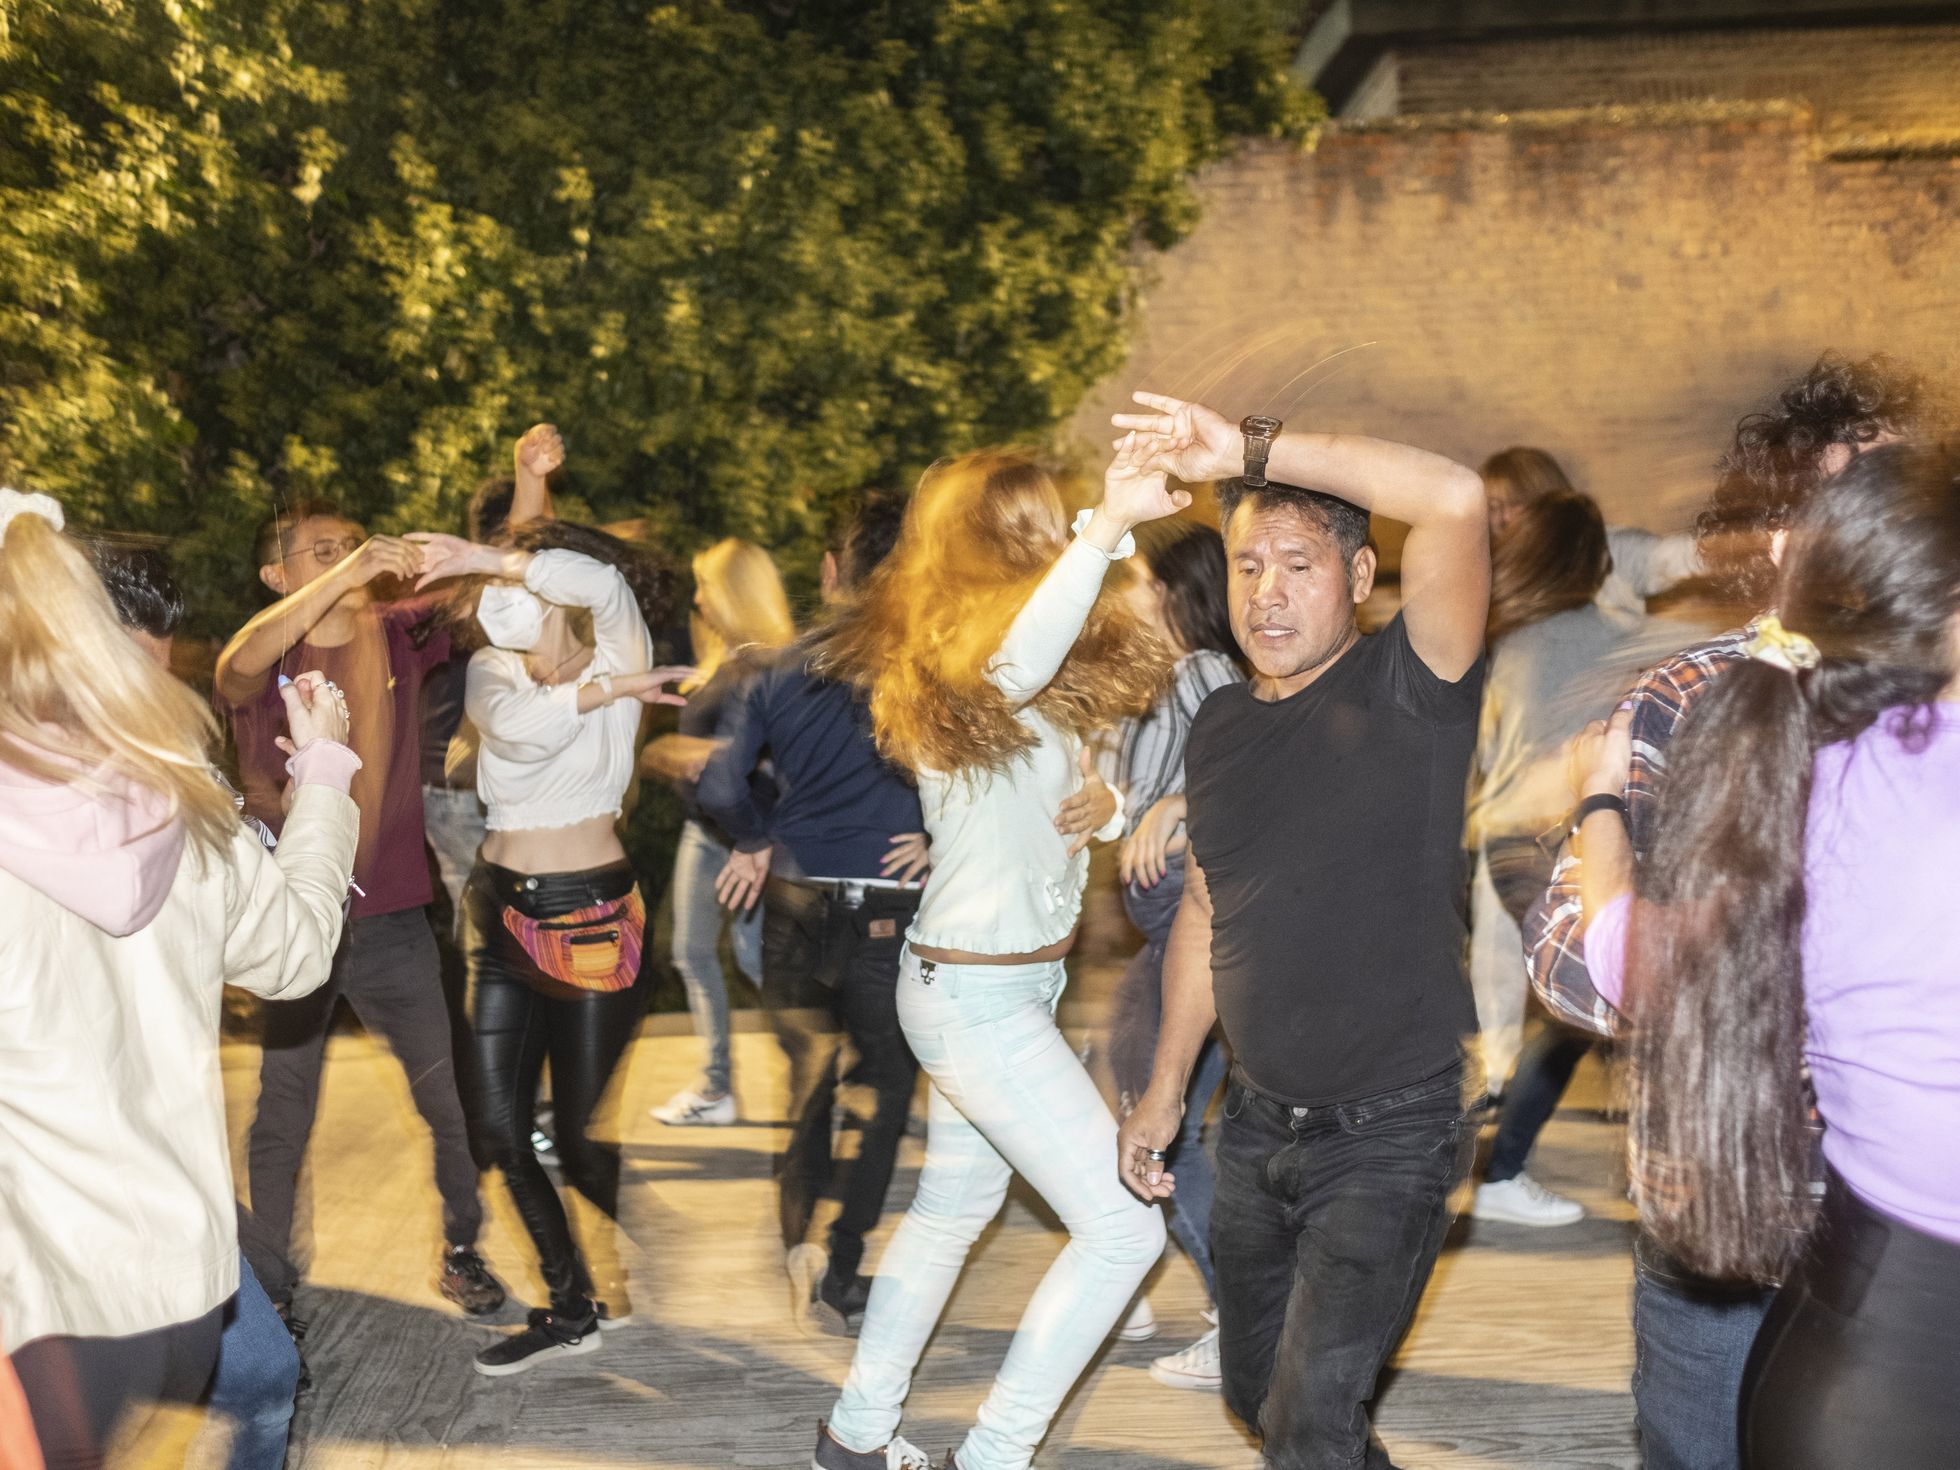 Bailar, libertad clandestina | Madrid | EL PAÍS